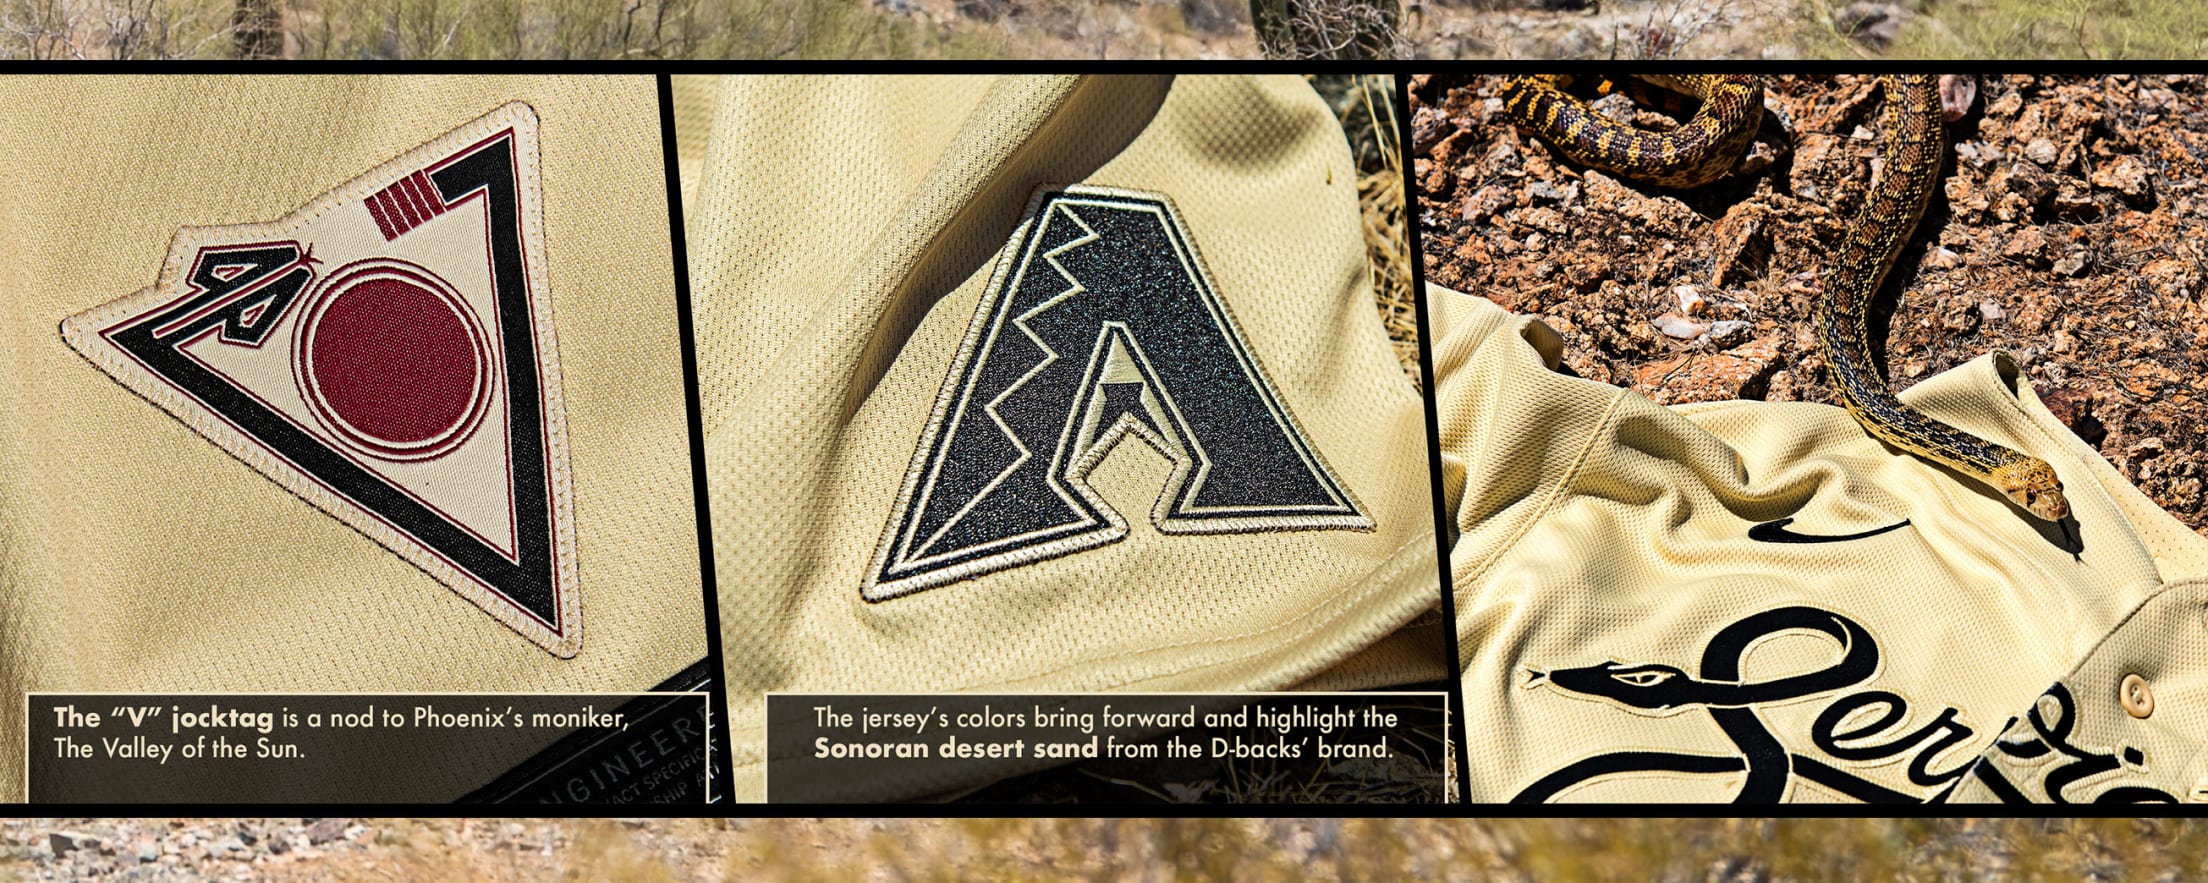 arizona diamondbacks serpientes jersey